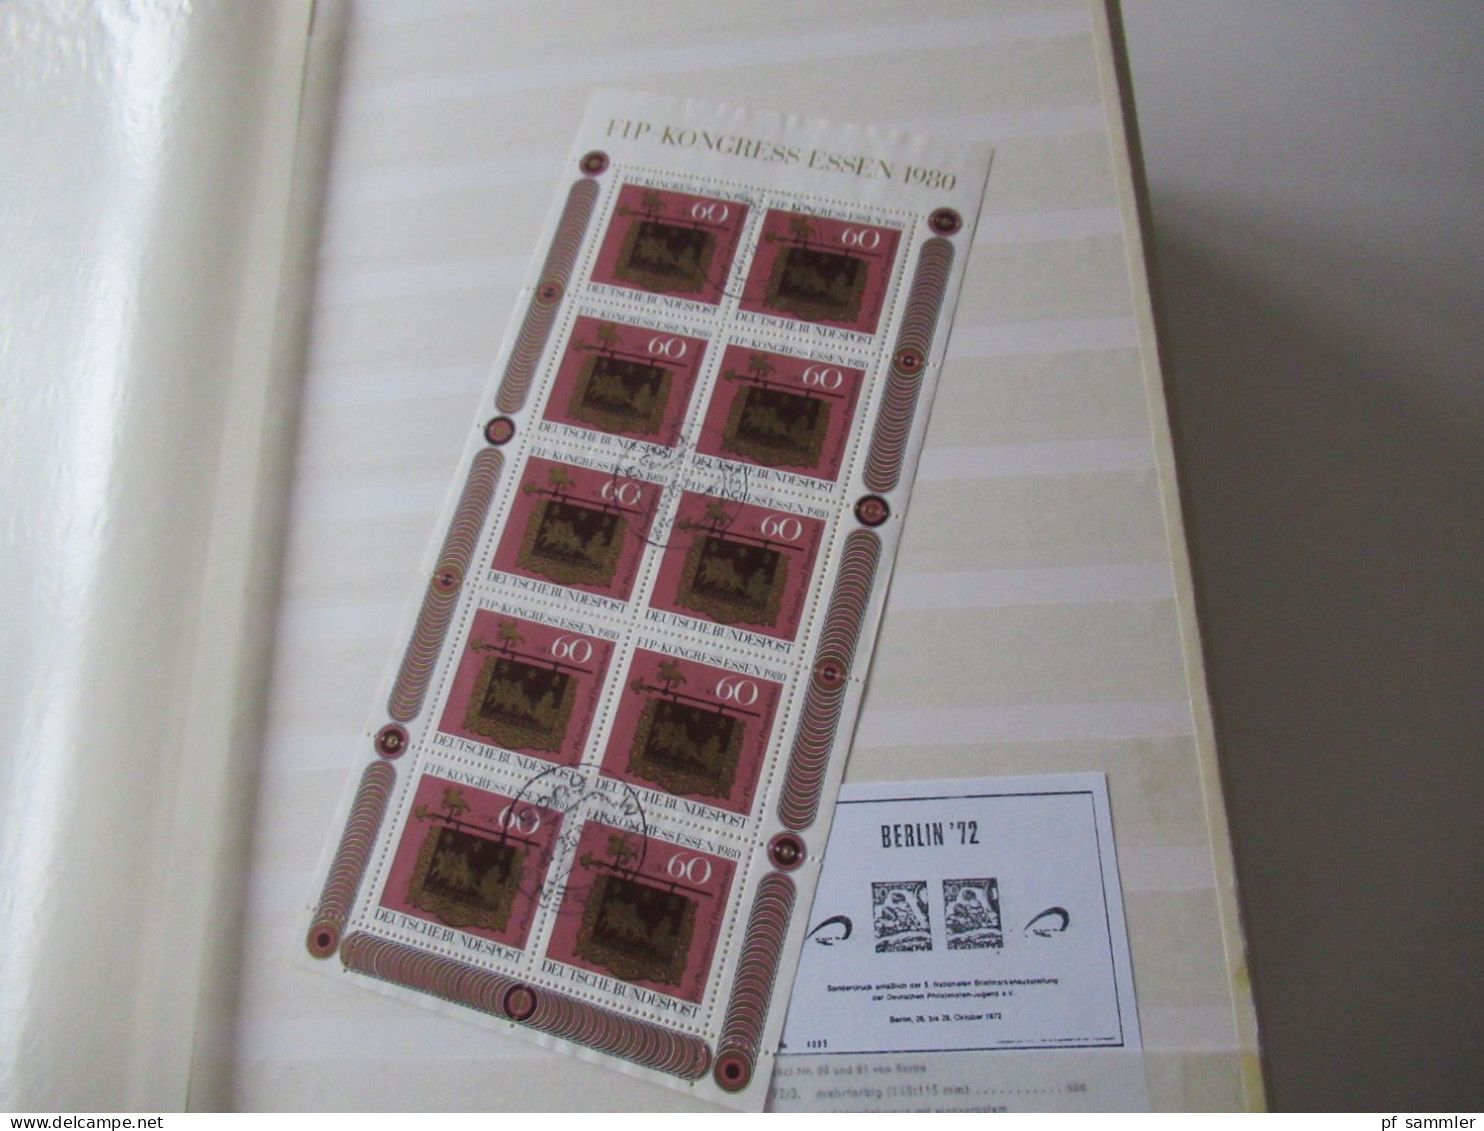 Sammlung / Interessantes Album / Lagerbuch BRD 1957 - 1983 Tausende Gestempelte Marken  / Absolute Fundgrube! - Colecciones (en álbumes)